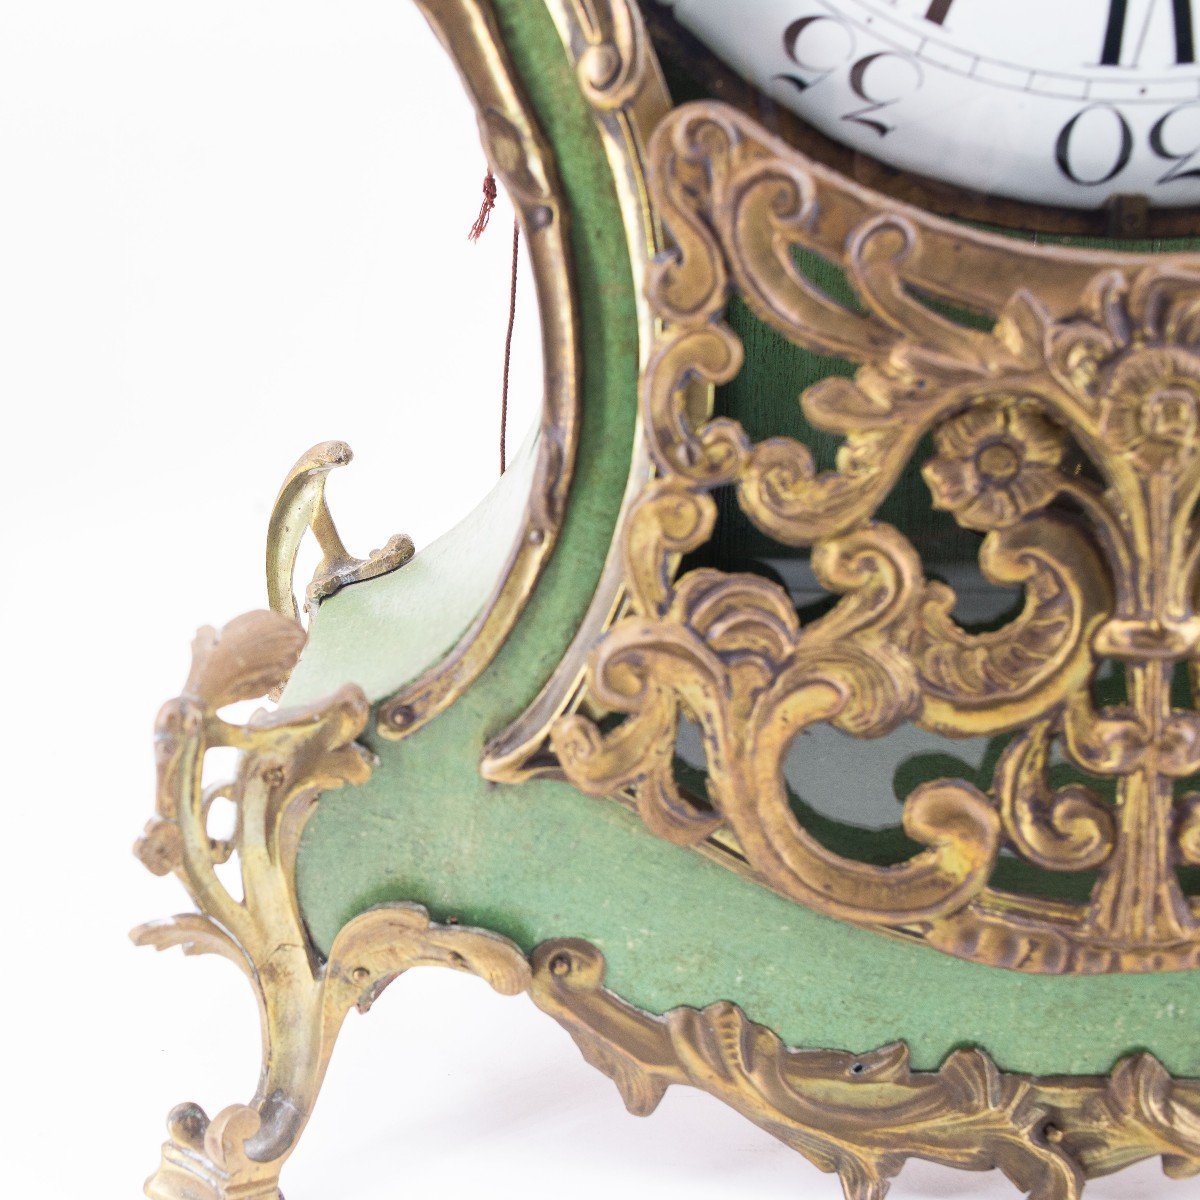 Antique Cartel Louis XV Clock, 1700s Era-photo-3